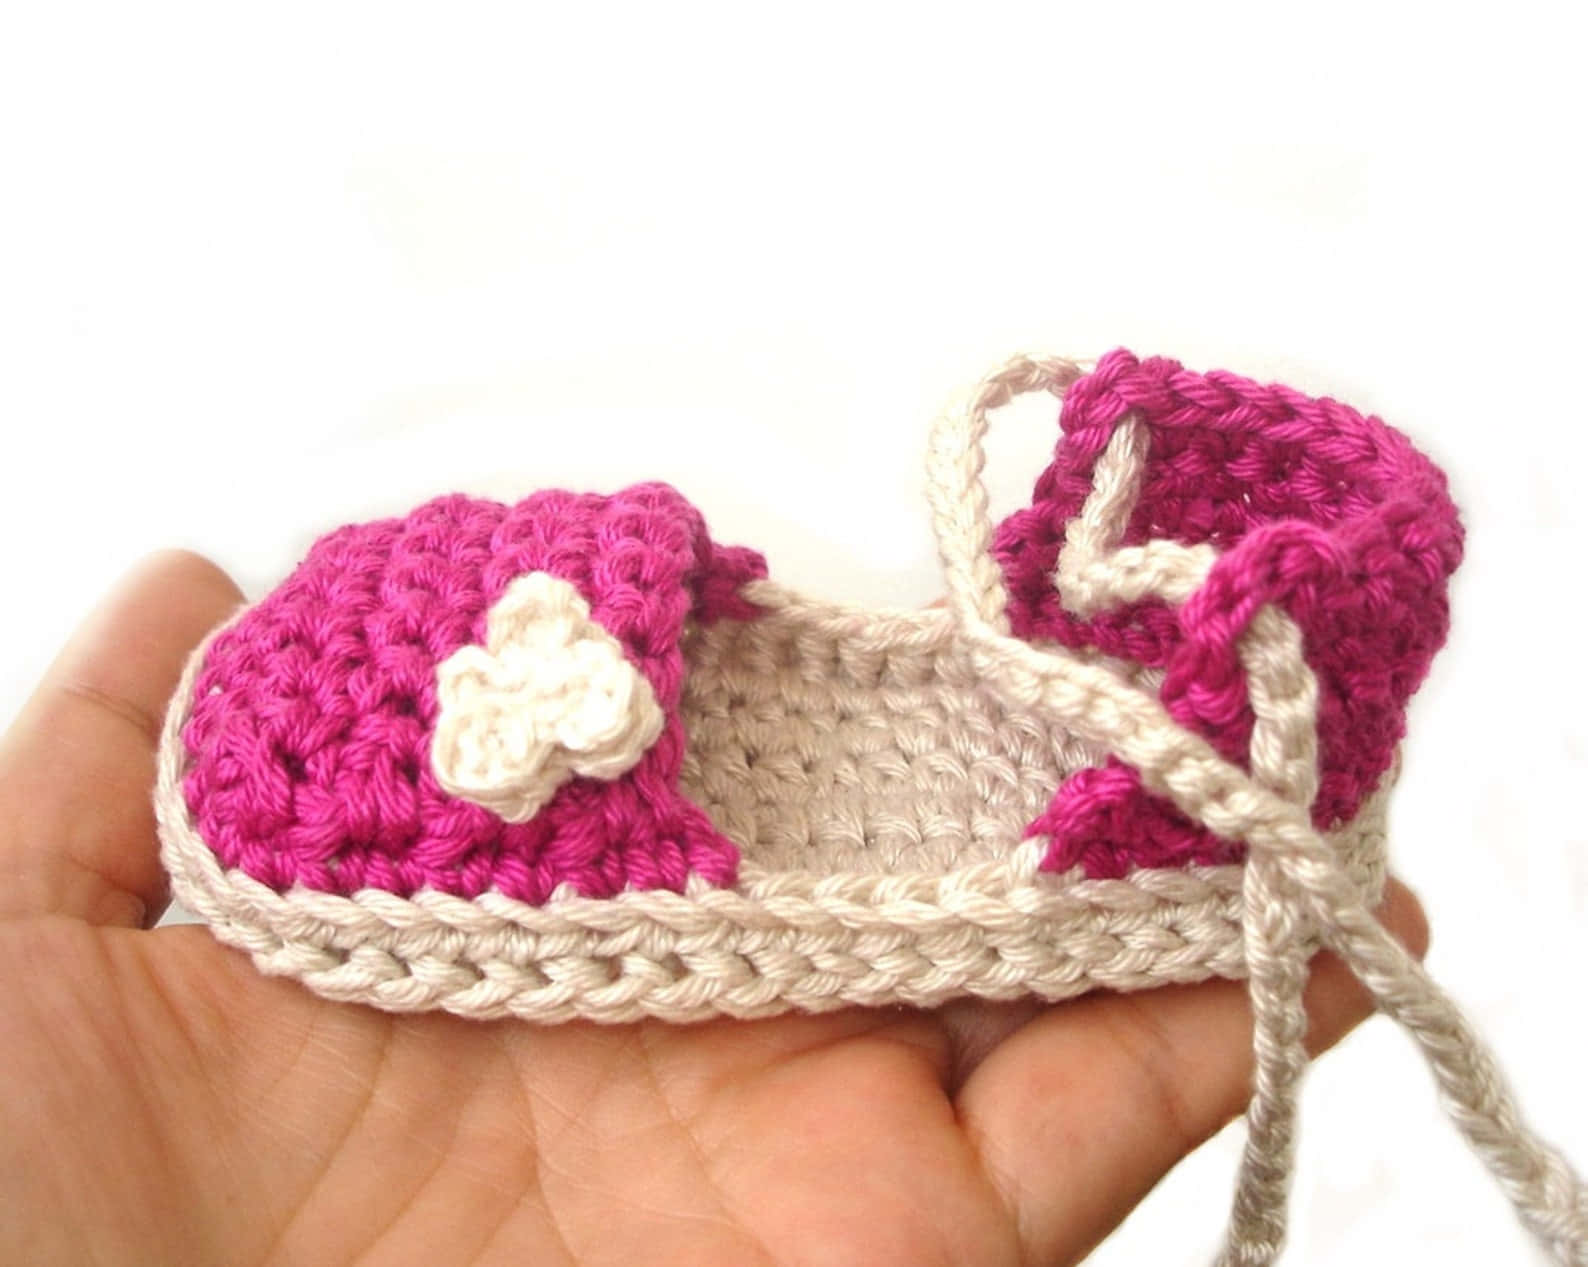 Handmade Colorful Crochet Patterns